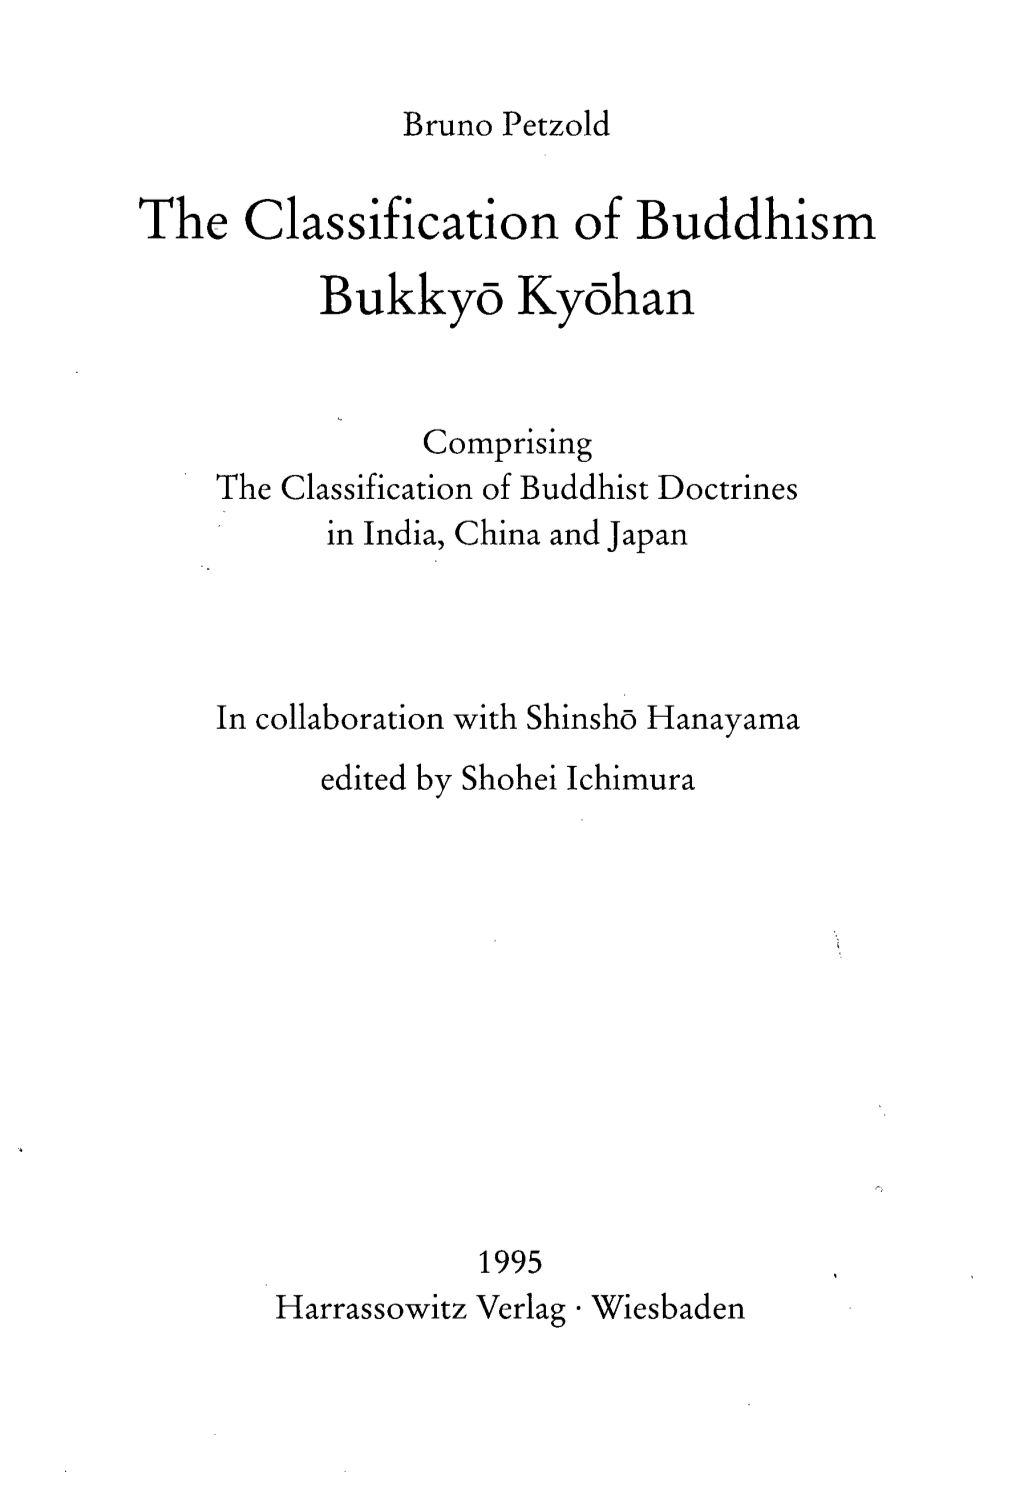 The Classification of Buddhism Bukkyo Kyohan